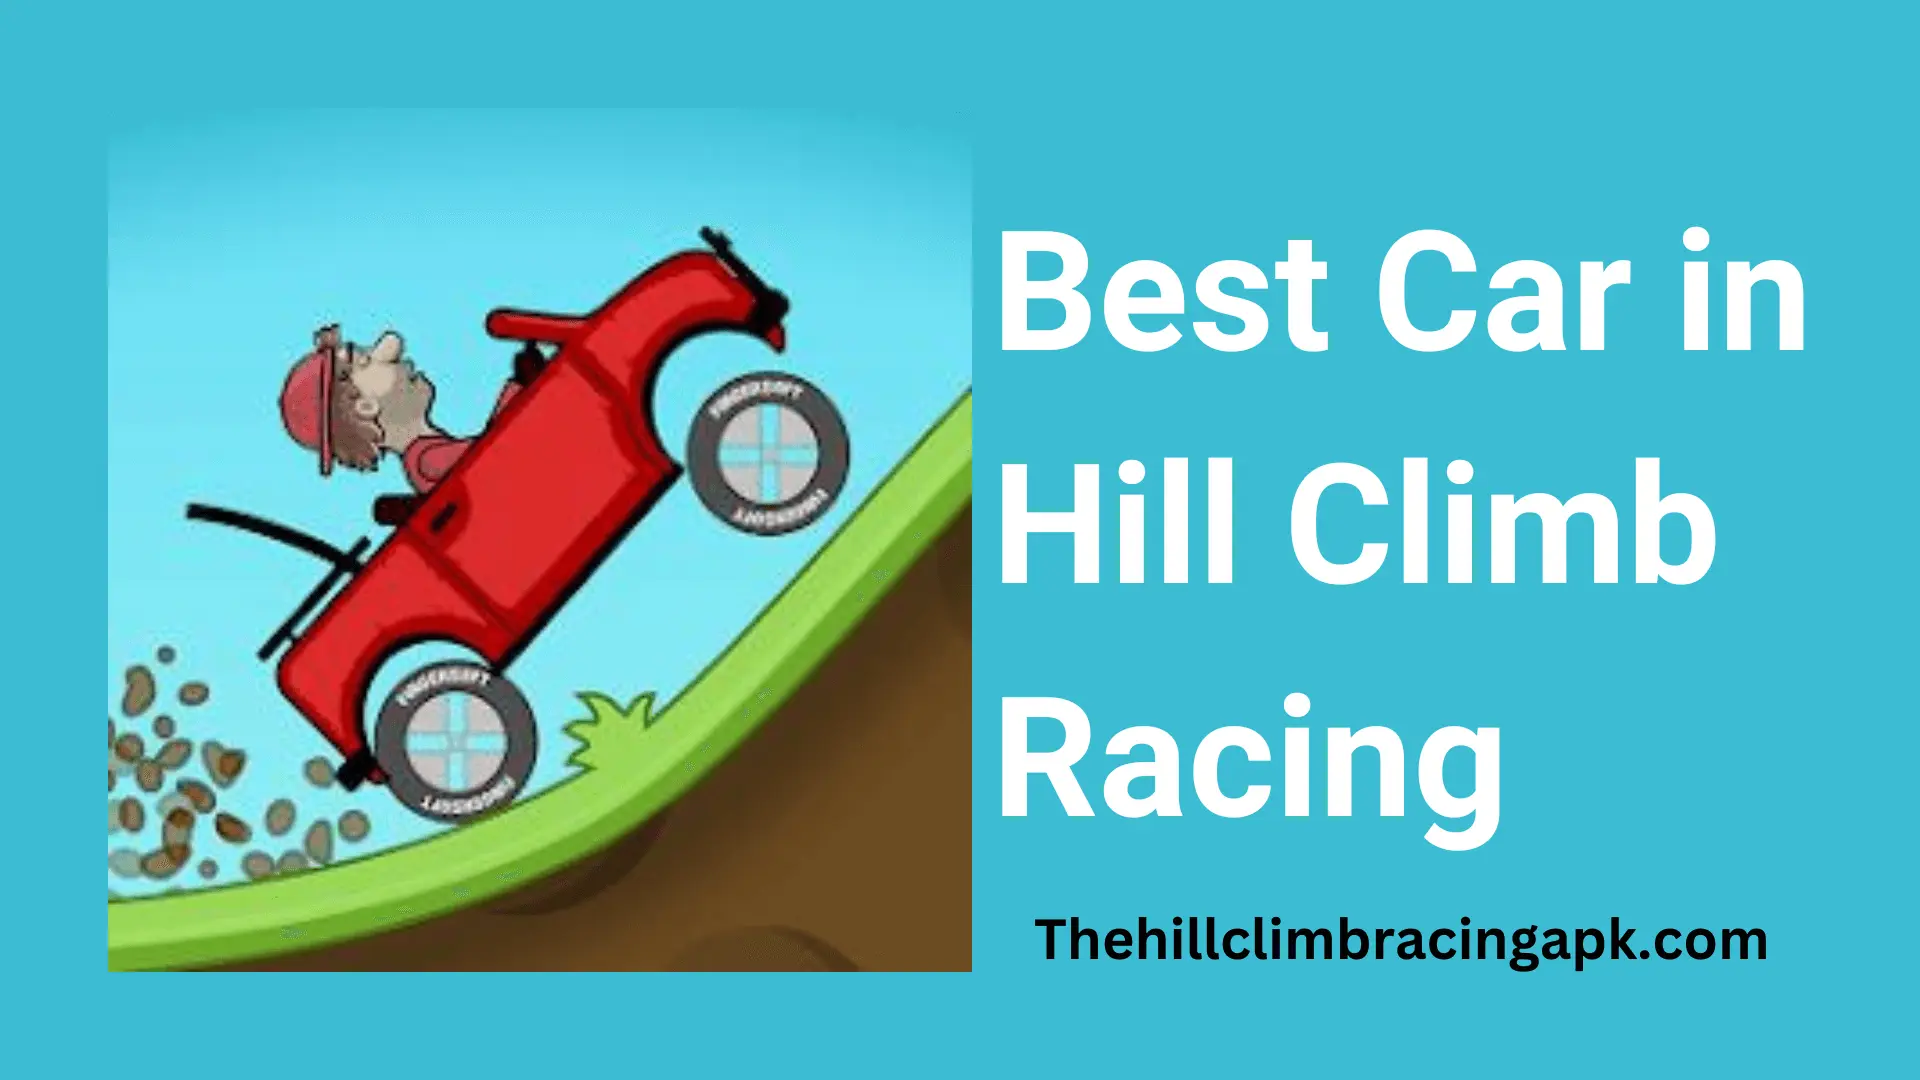 TOP 3 BEST CAR on HILL CLIMB EVENT - HILL CLIMB RACING 2 